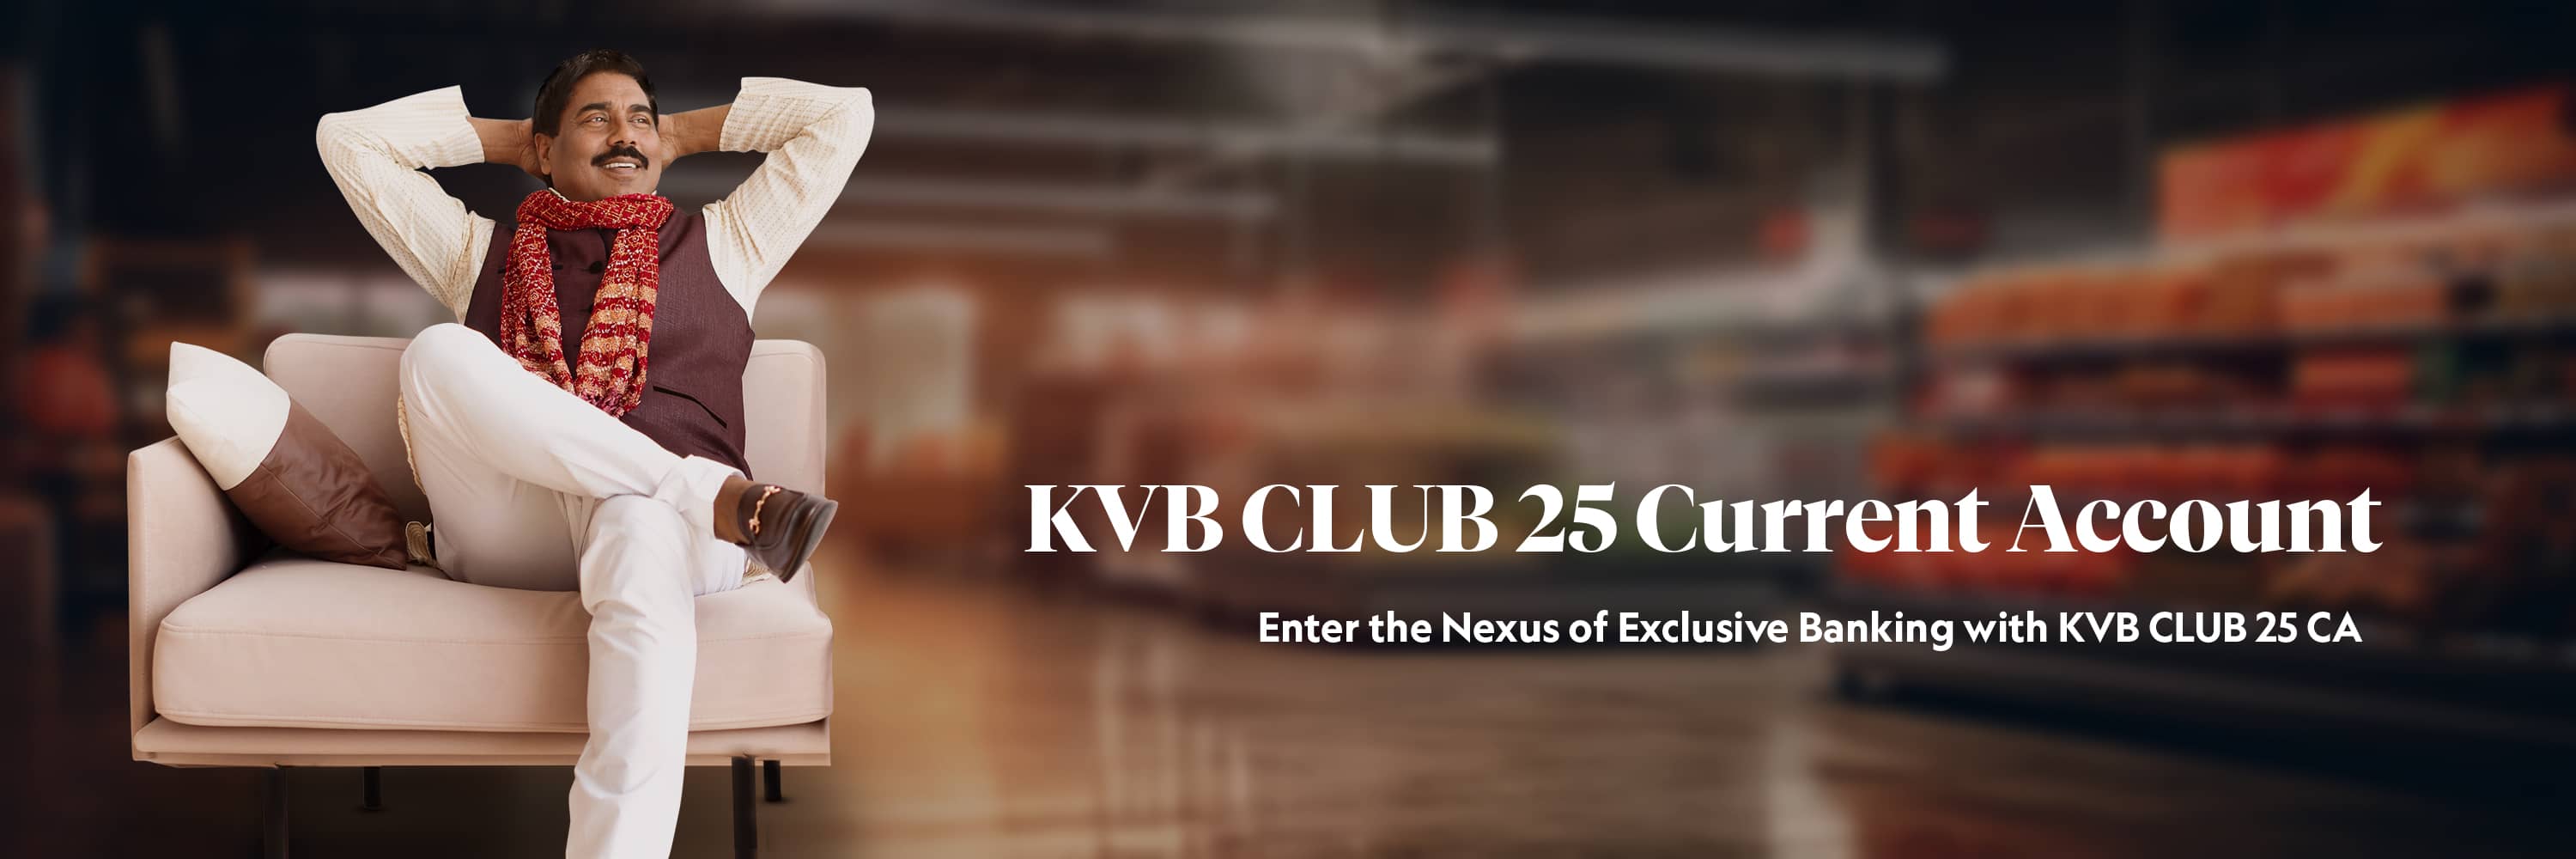 KVB CLUB 25 Current Account